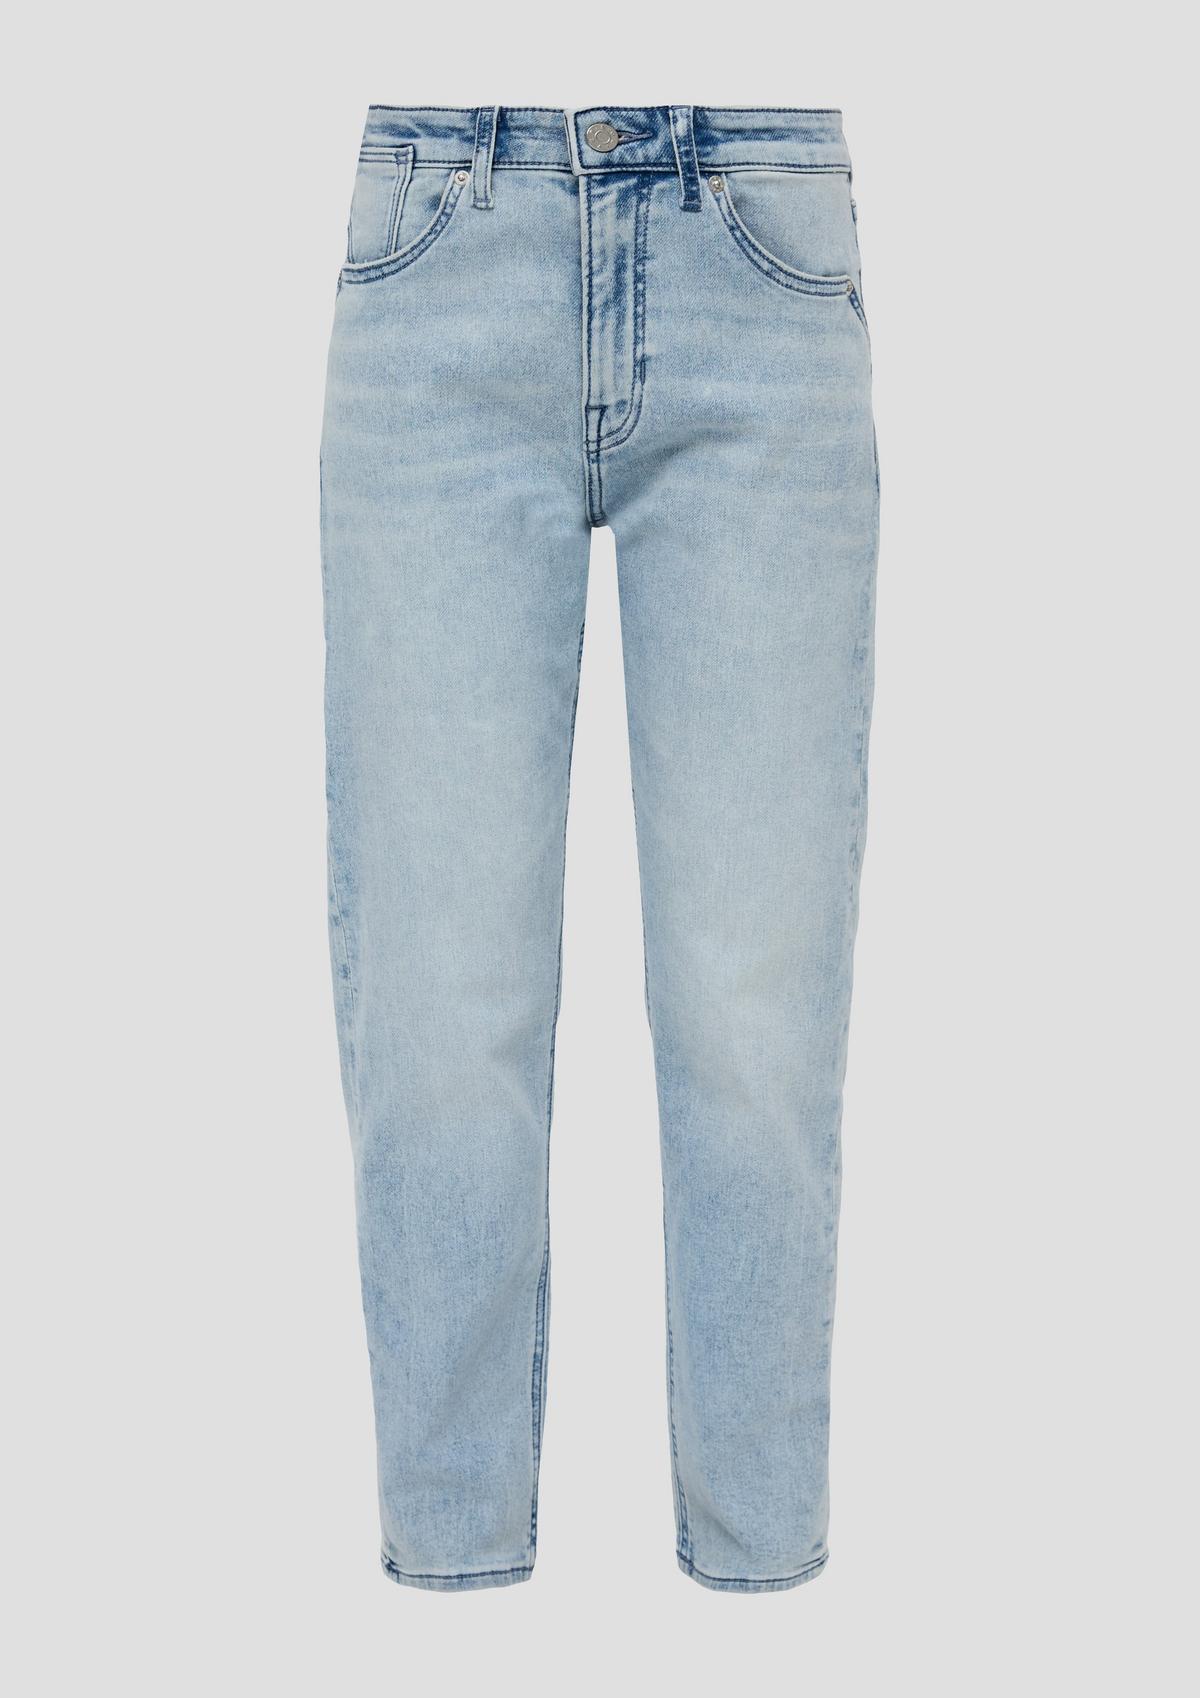 s.Oliver jeans dolžine do gležnjev Franciz/kroj Relaxed Fit/Mid Rise/Tapered Leg